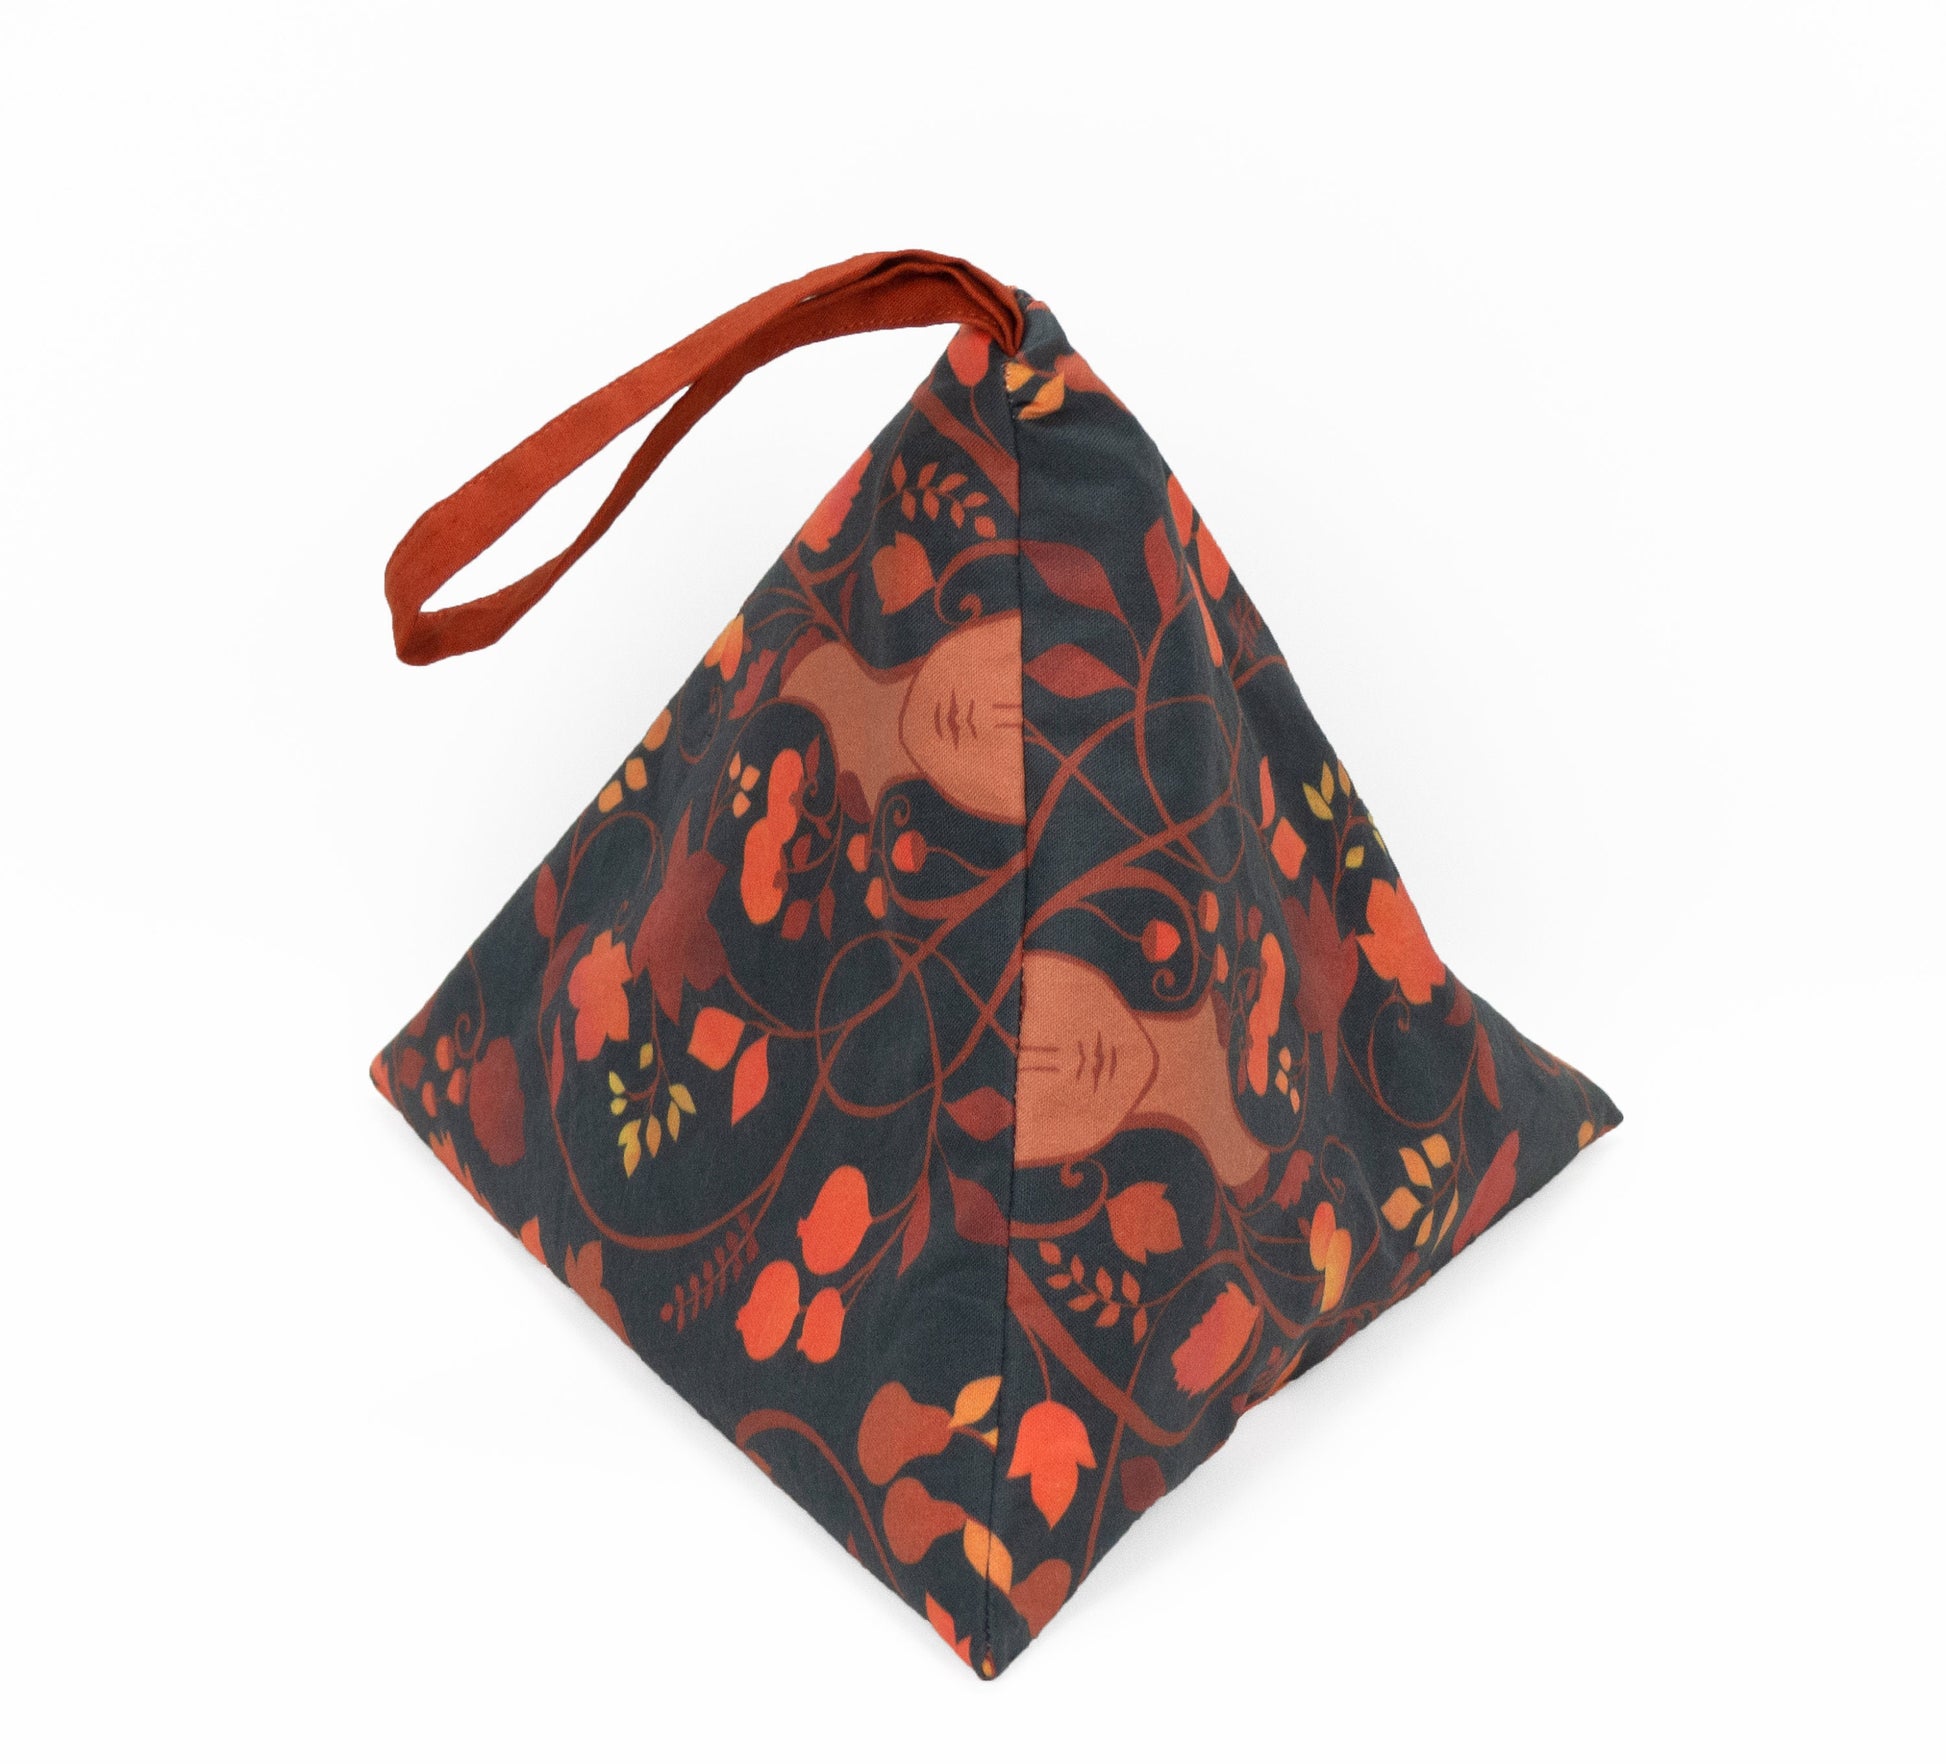 Autumn Equinox Dark - Llexical Divided Sock Pouch - Knitting, Crochet, Spinning Project Bag